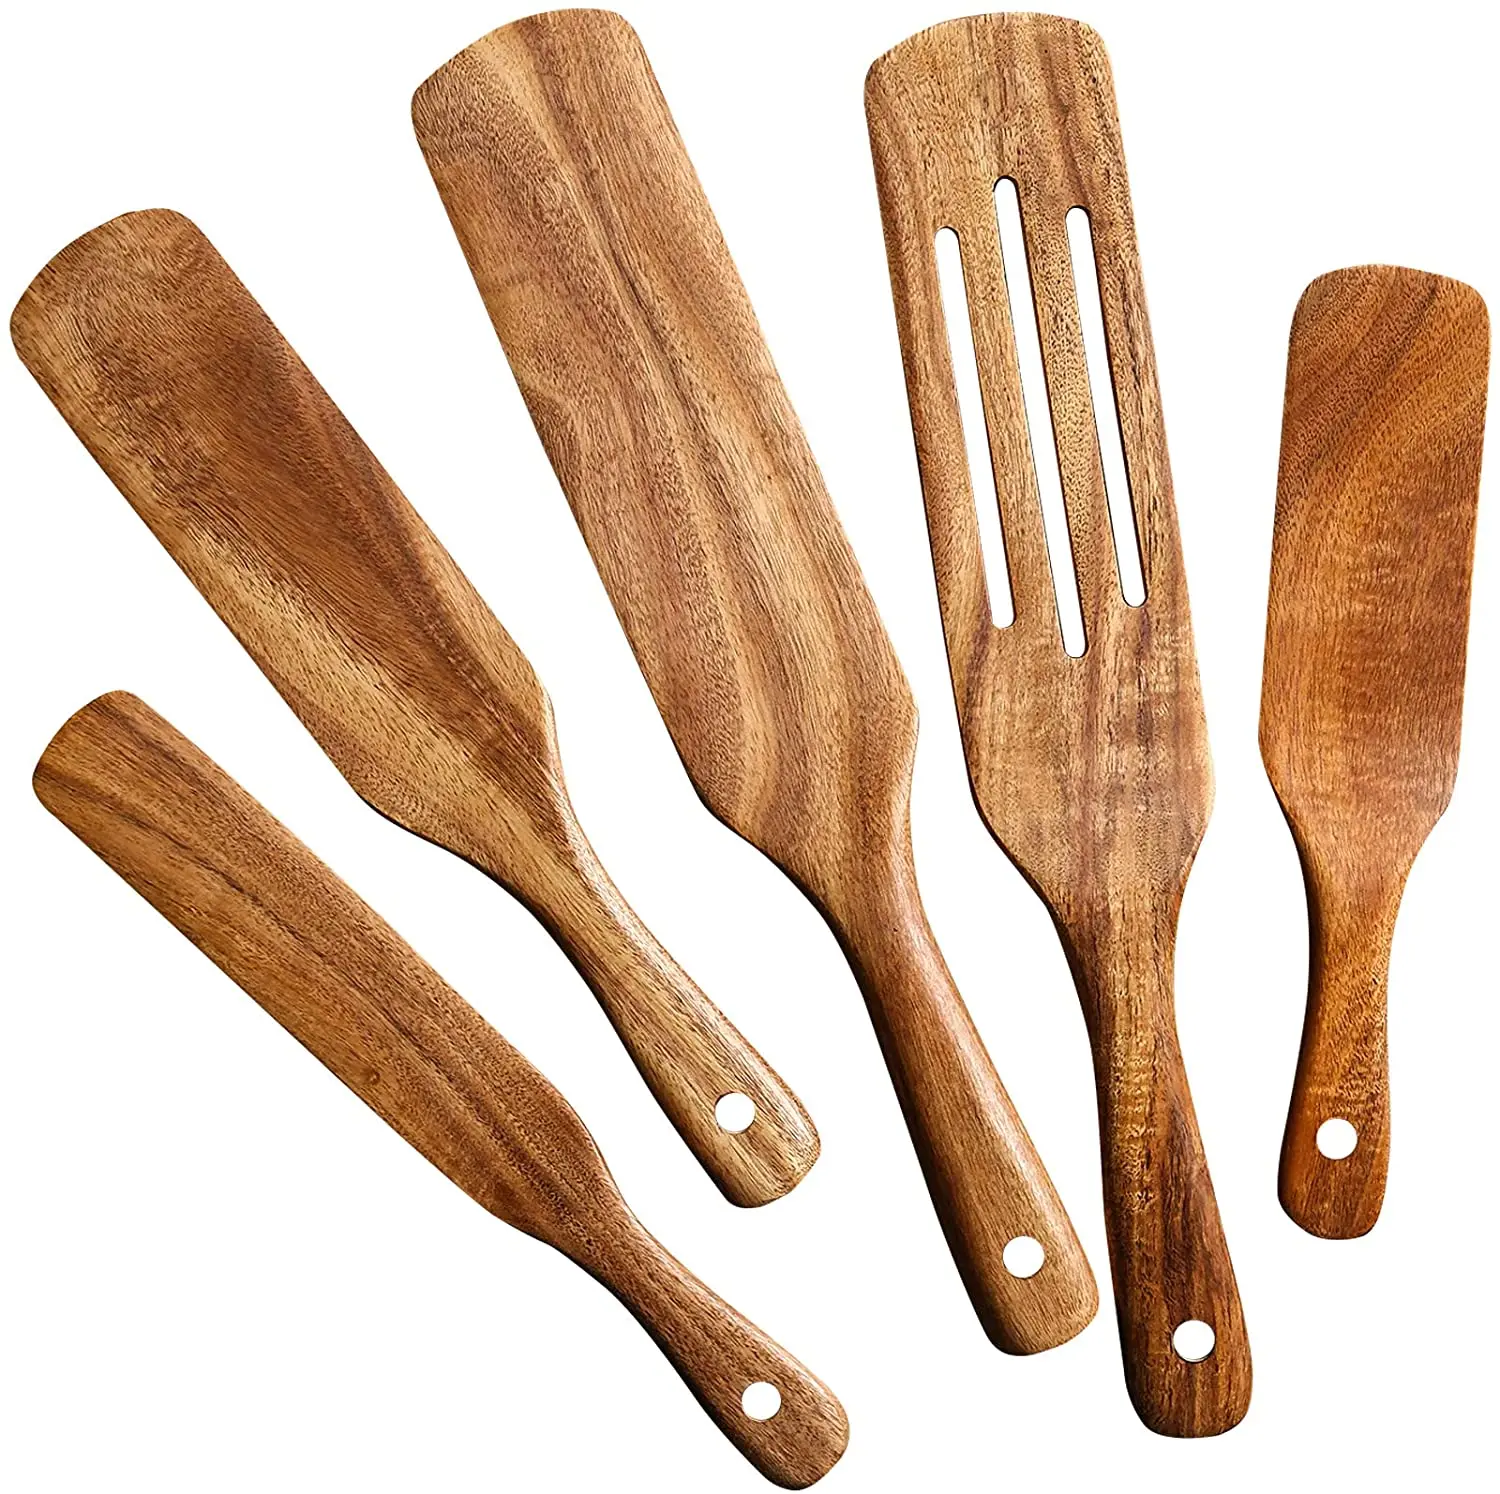 

Custom Wooden Spurtles Set 5 pcs of Acacia Bamboo Beech Teak Kitchen Accessories Utensils Tools Holder Spoon Rest Bowl Set, Natural